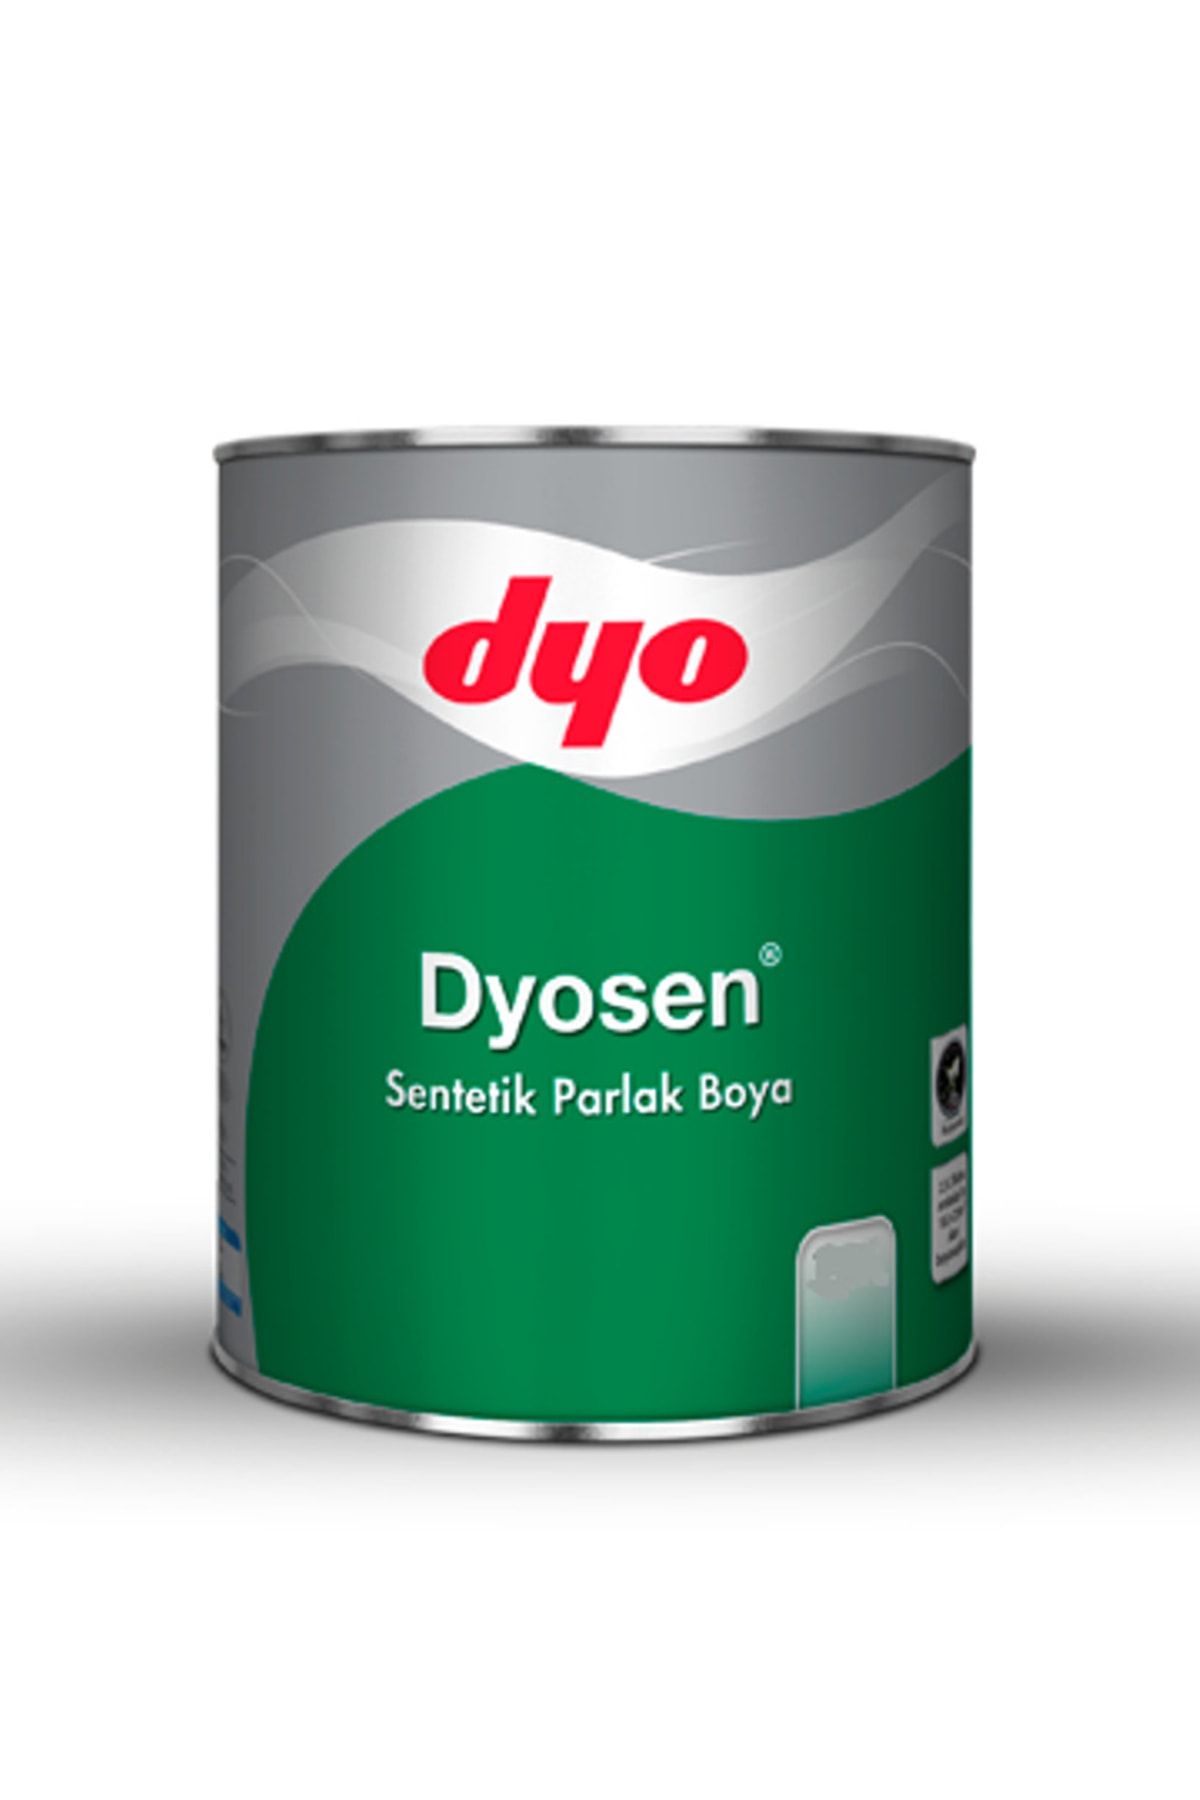 Dyo Dyosen Sentetik Parlak Boya 0,75 litre (Vişne)